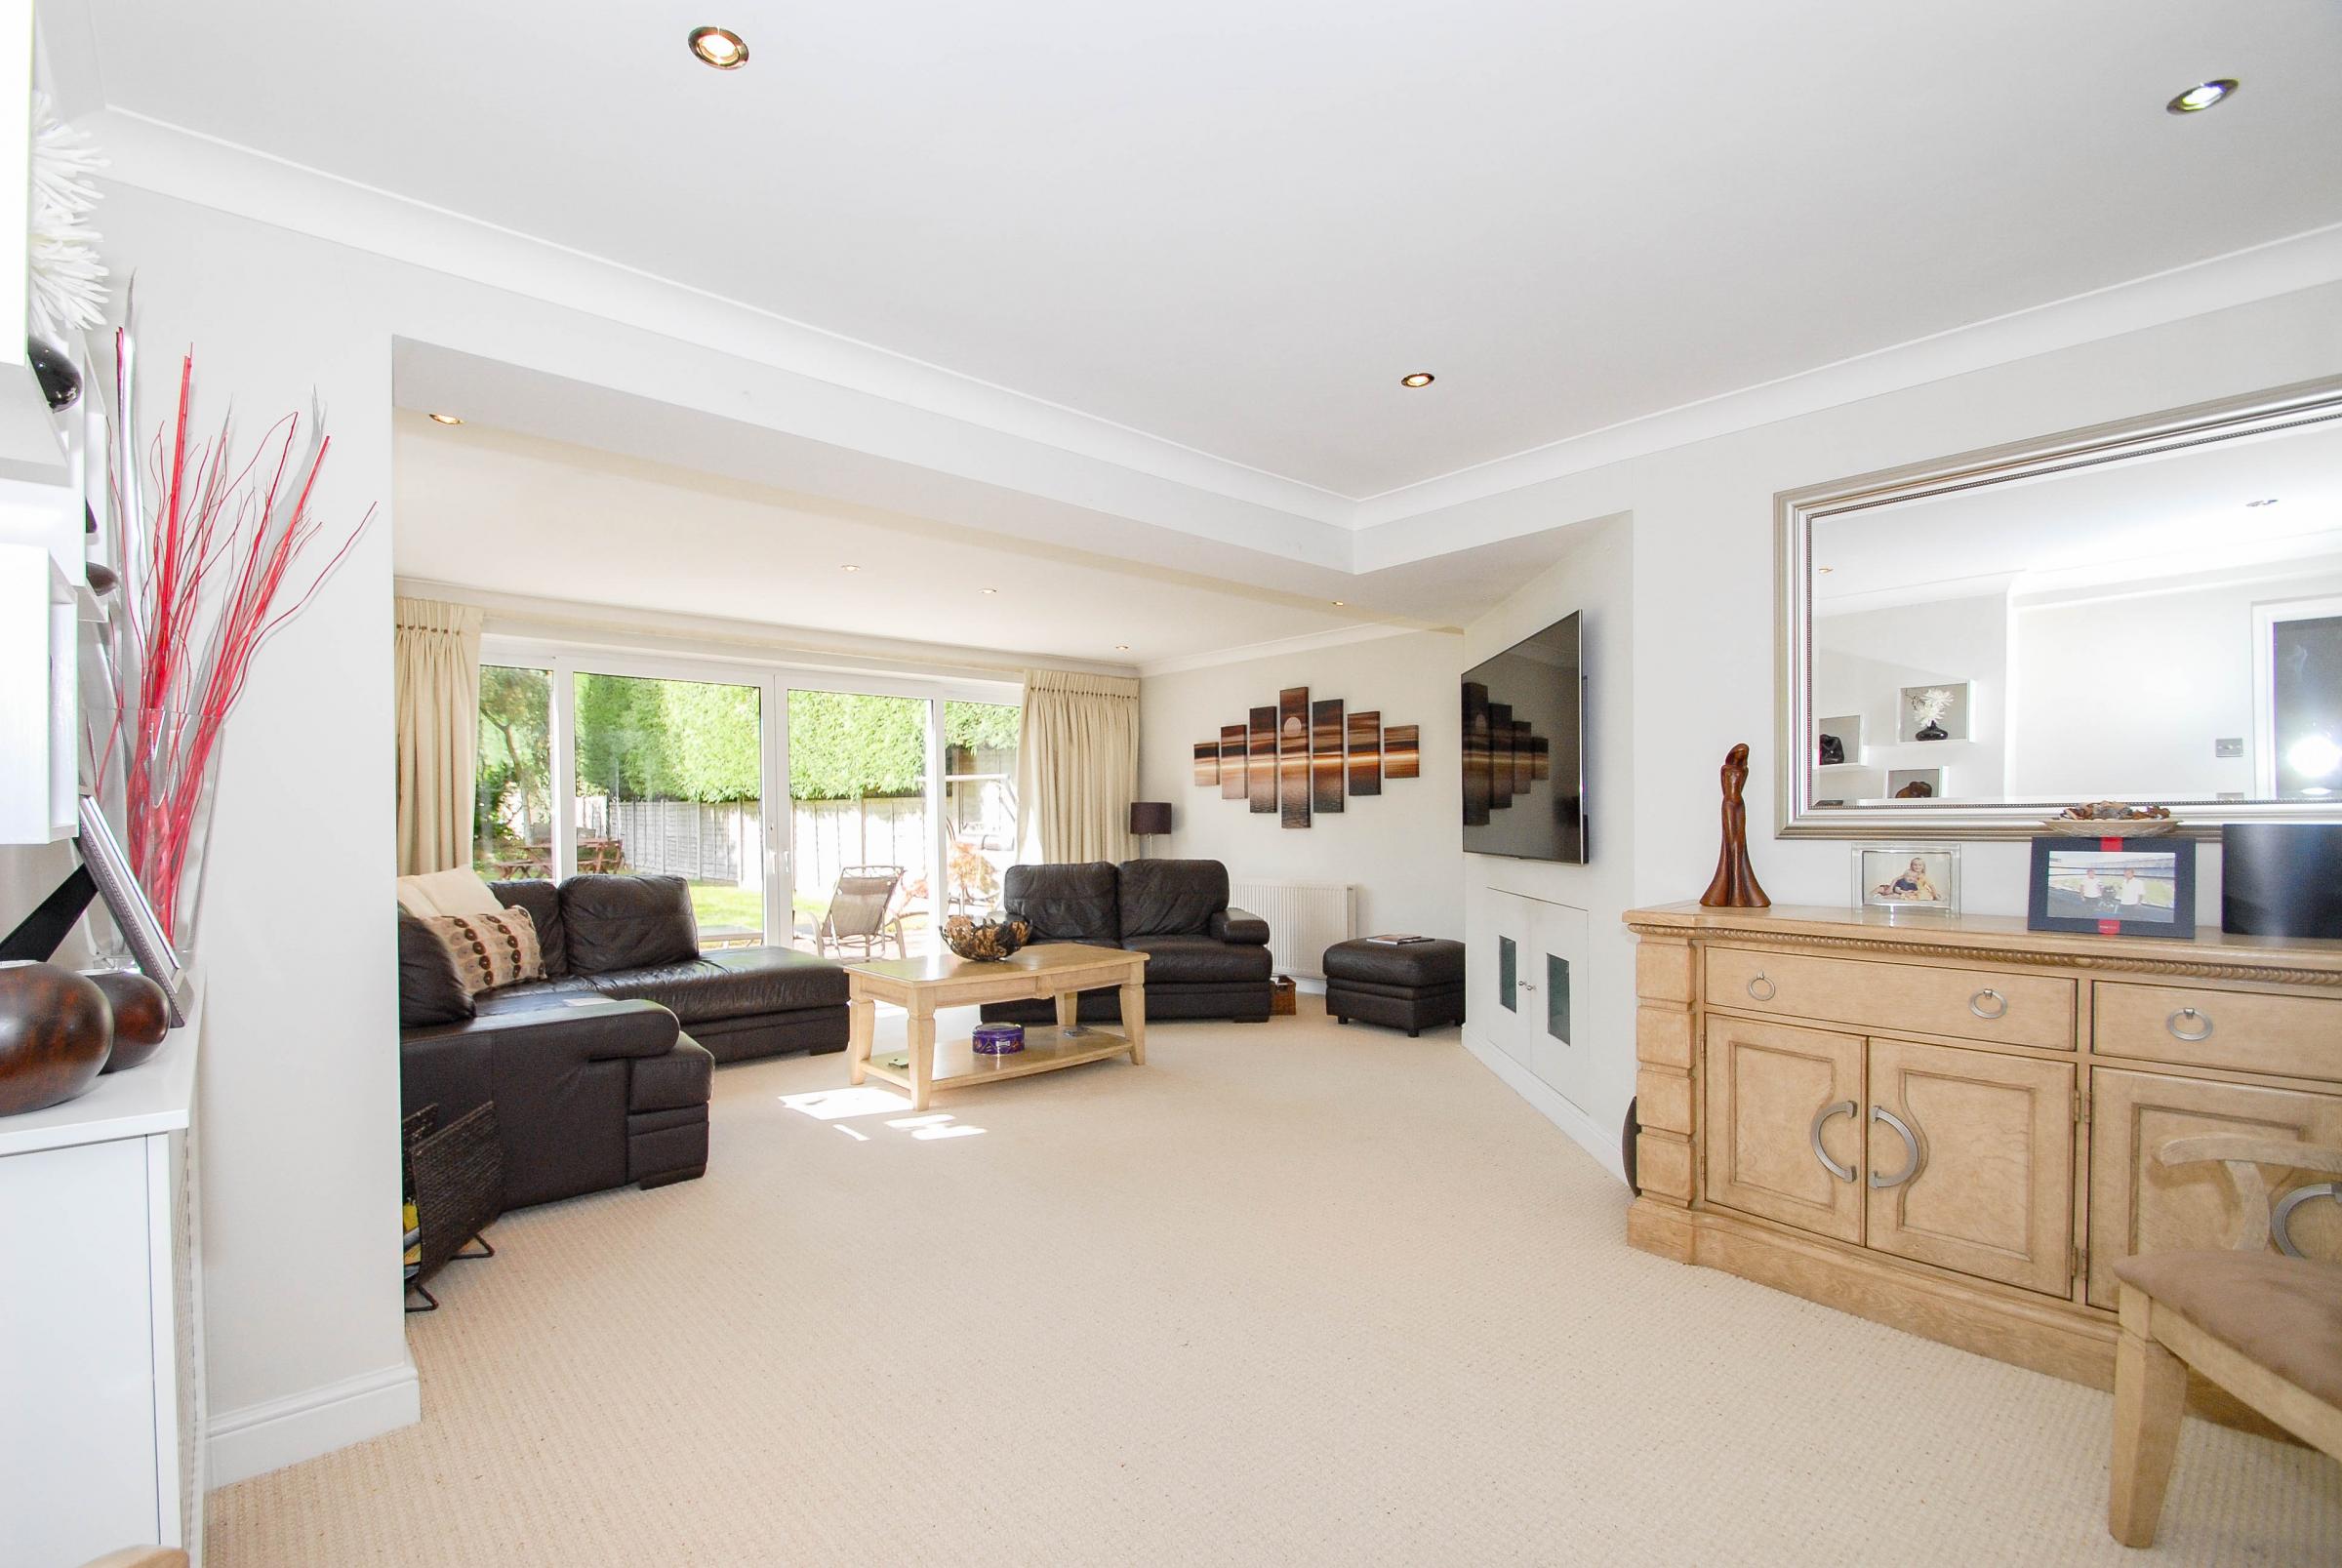 Super home up for sale in Albourne costing £749k